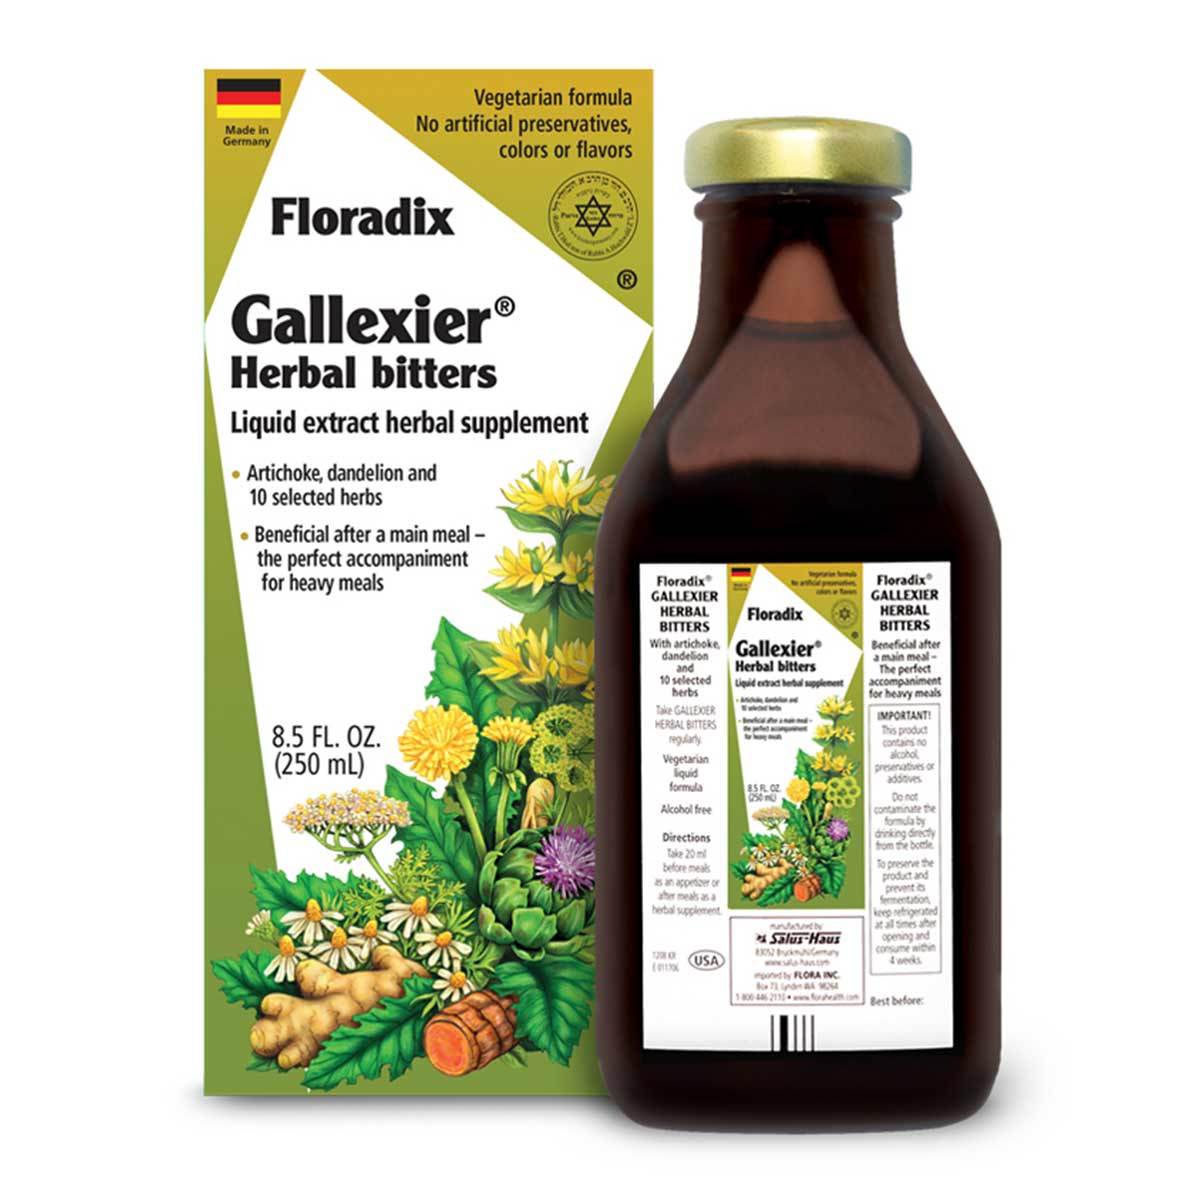 Primary image of Floradix Gallexier Herbal Bitters